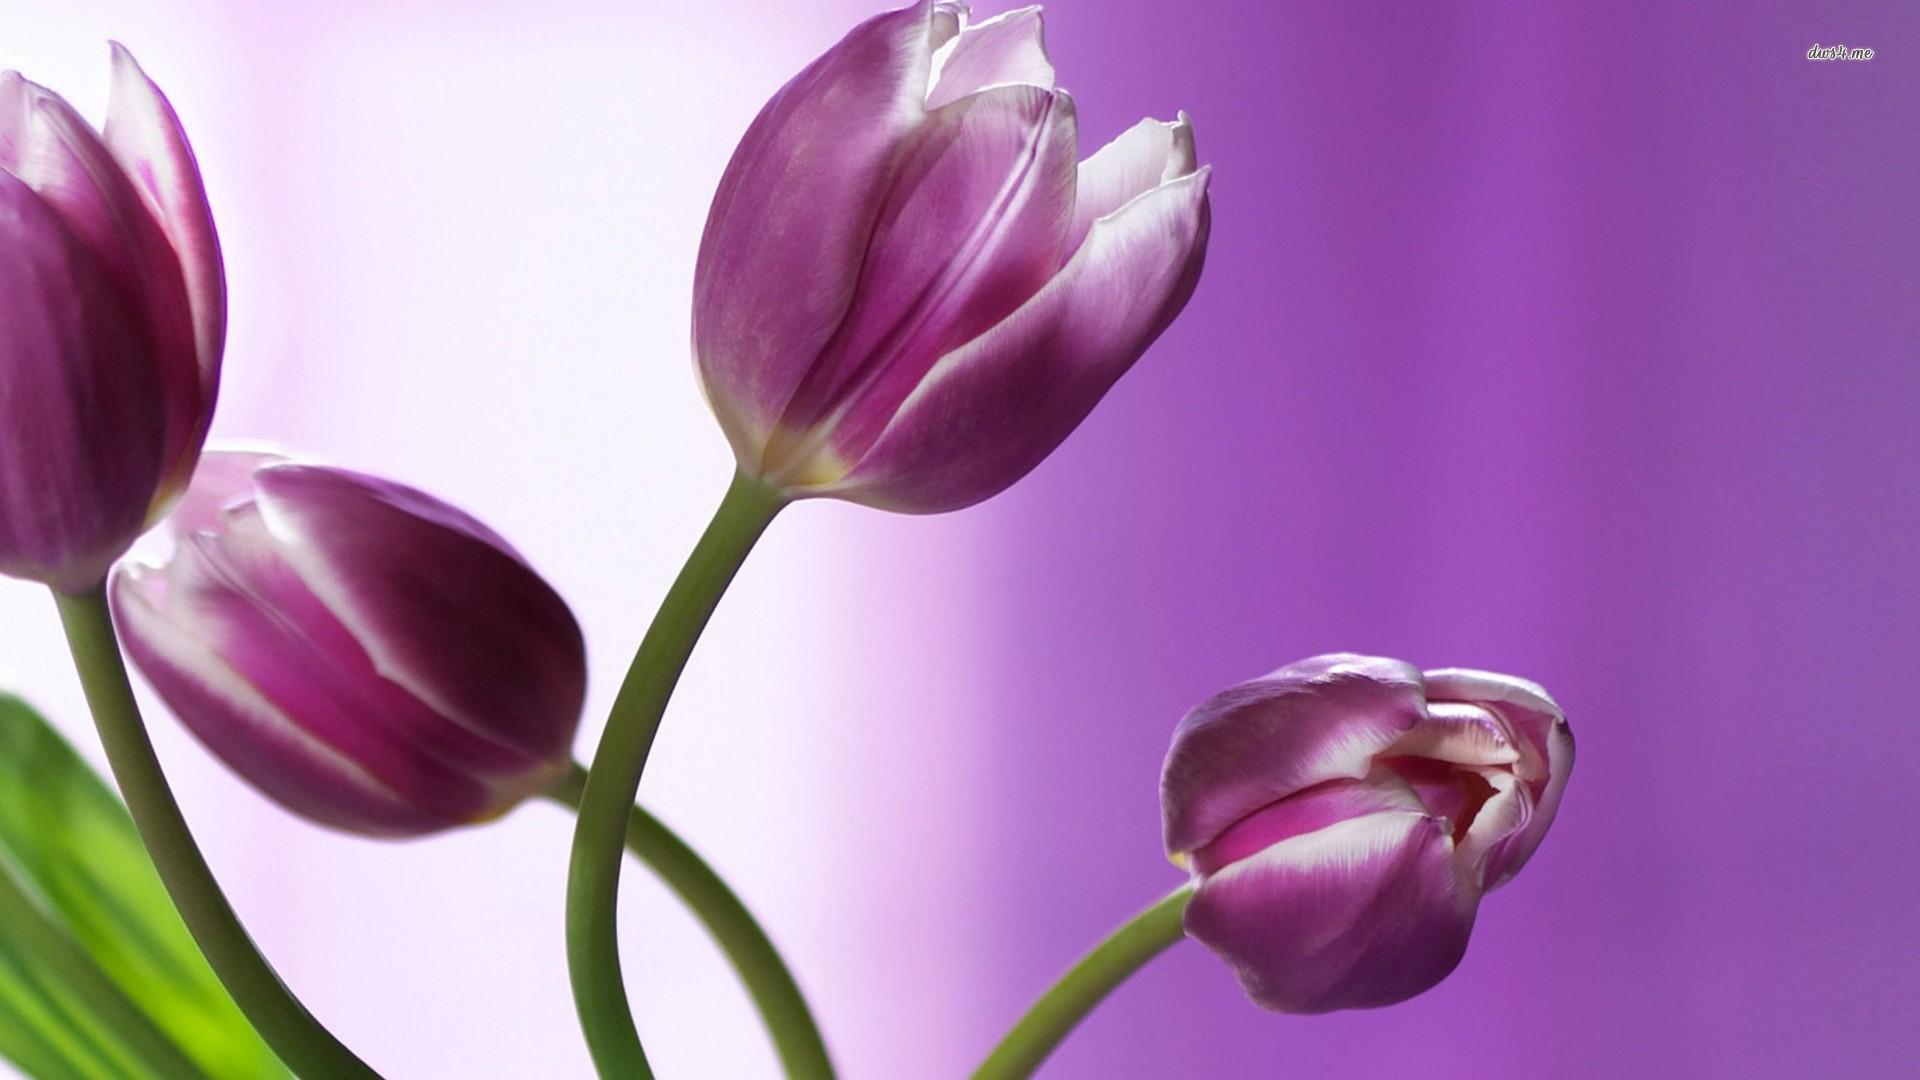 Purple and white tulips wallpaper wallpaper